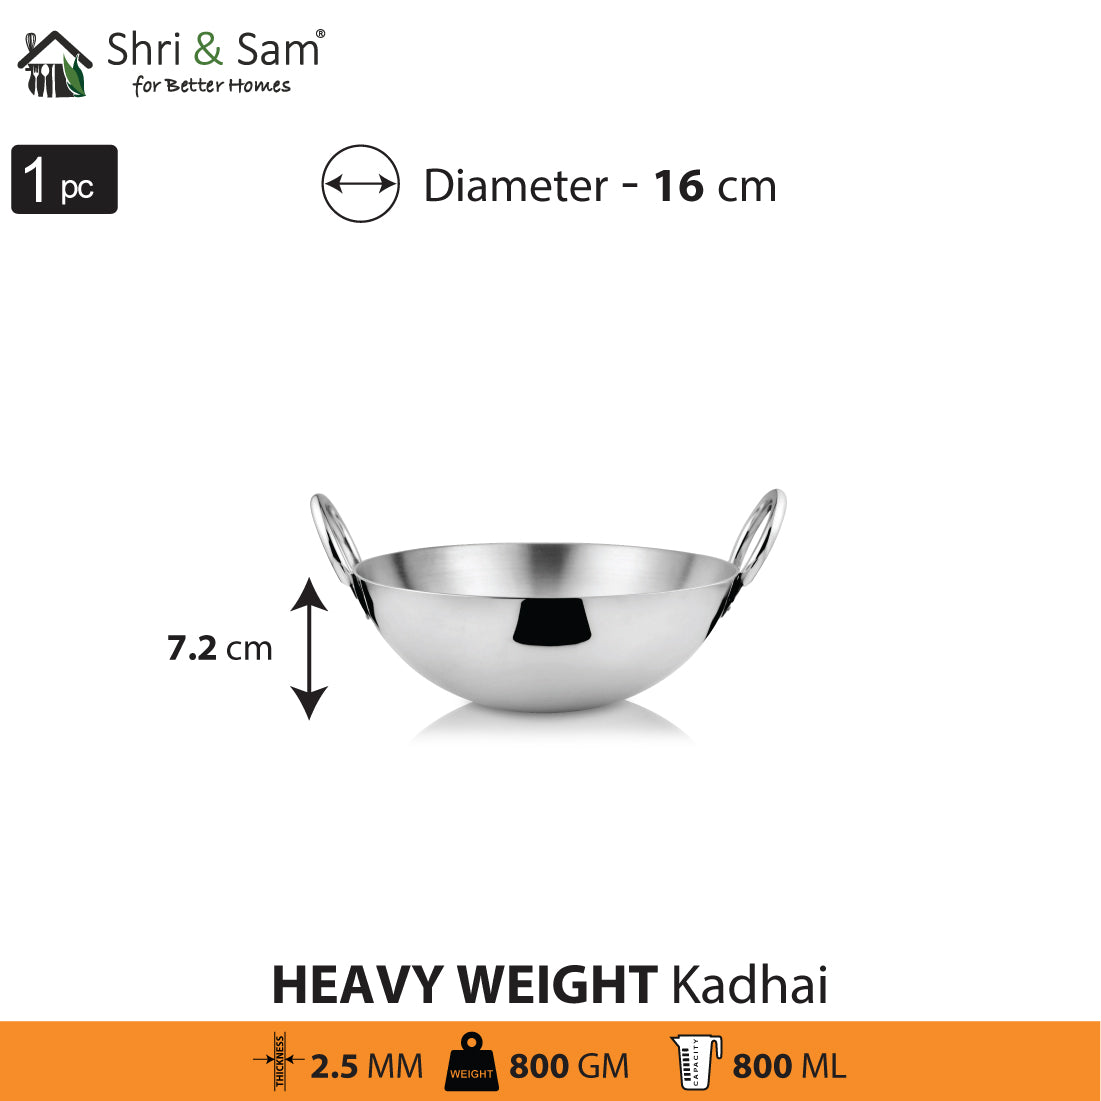 Stainless Steel Heavy Weight Kadhai